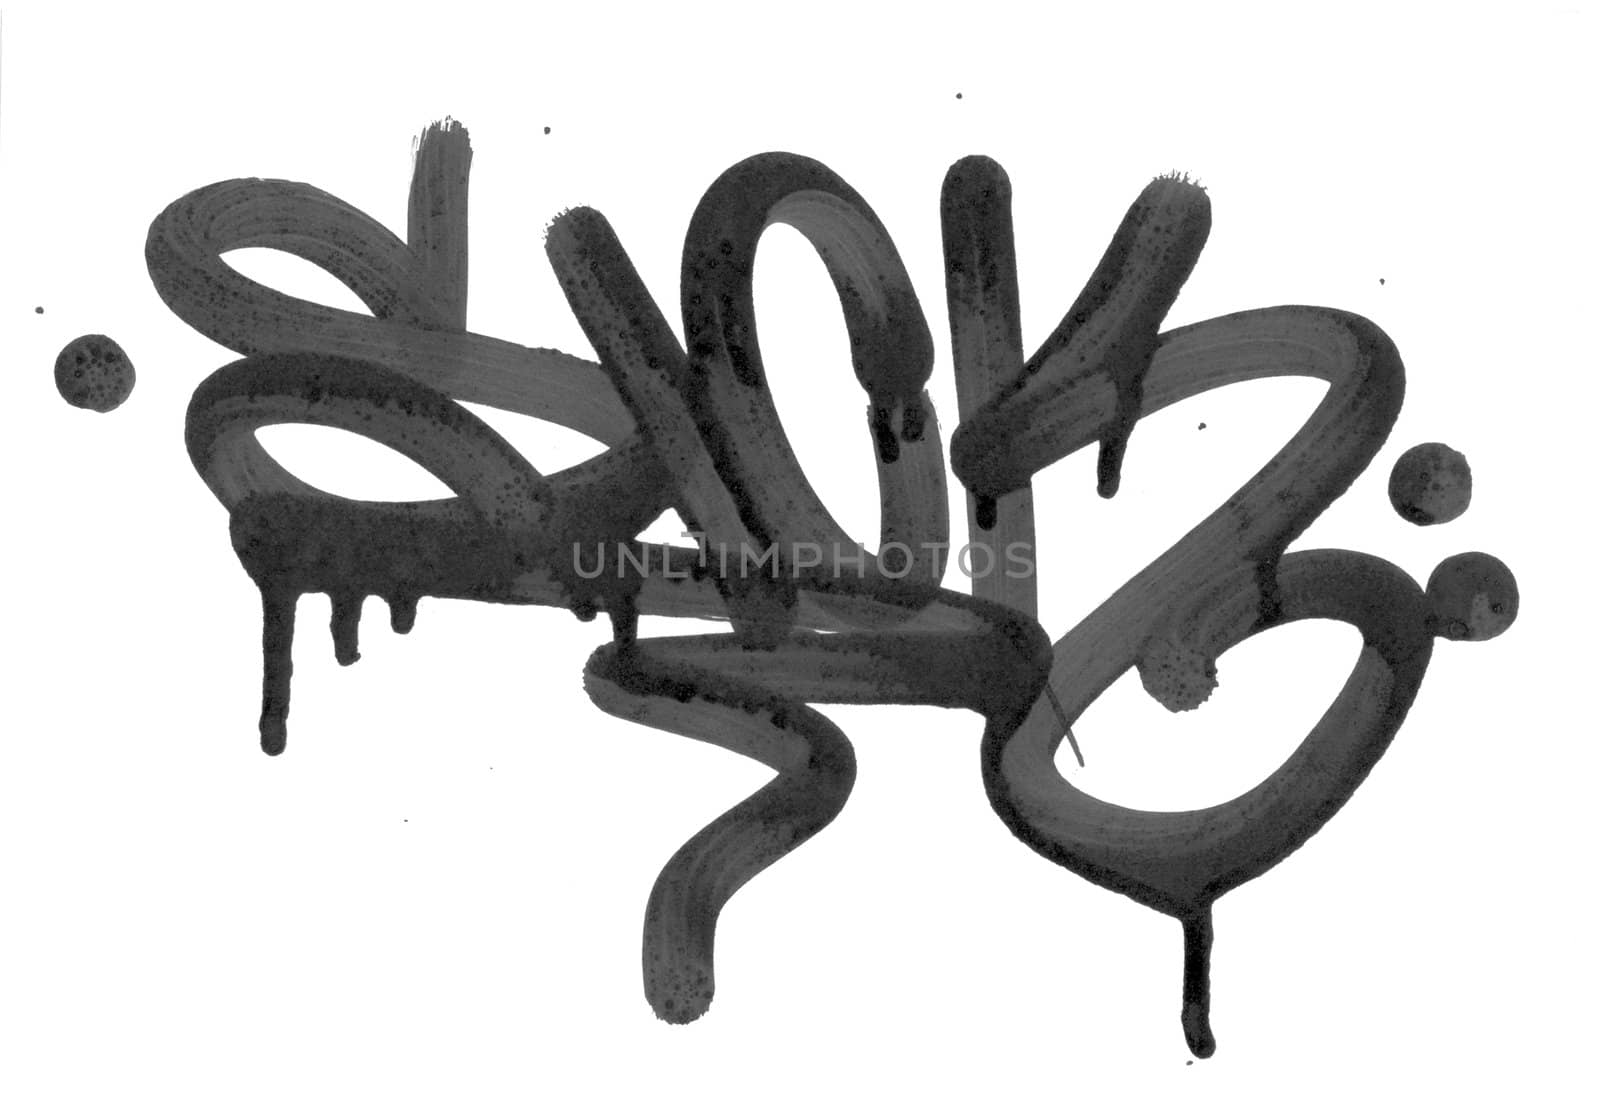 Graffitti spray paint - spraypaint vandalism grunge city urban youth